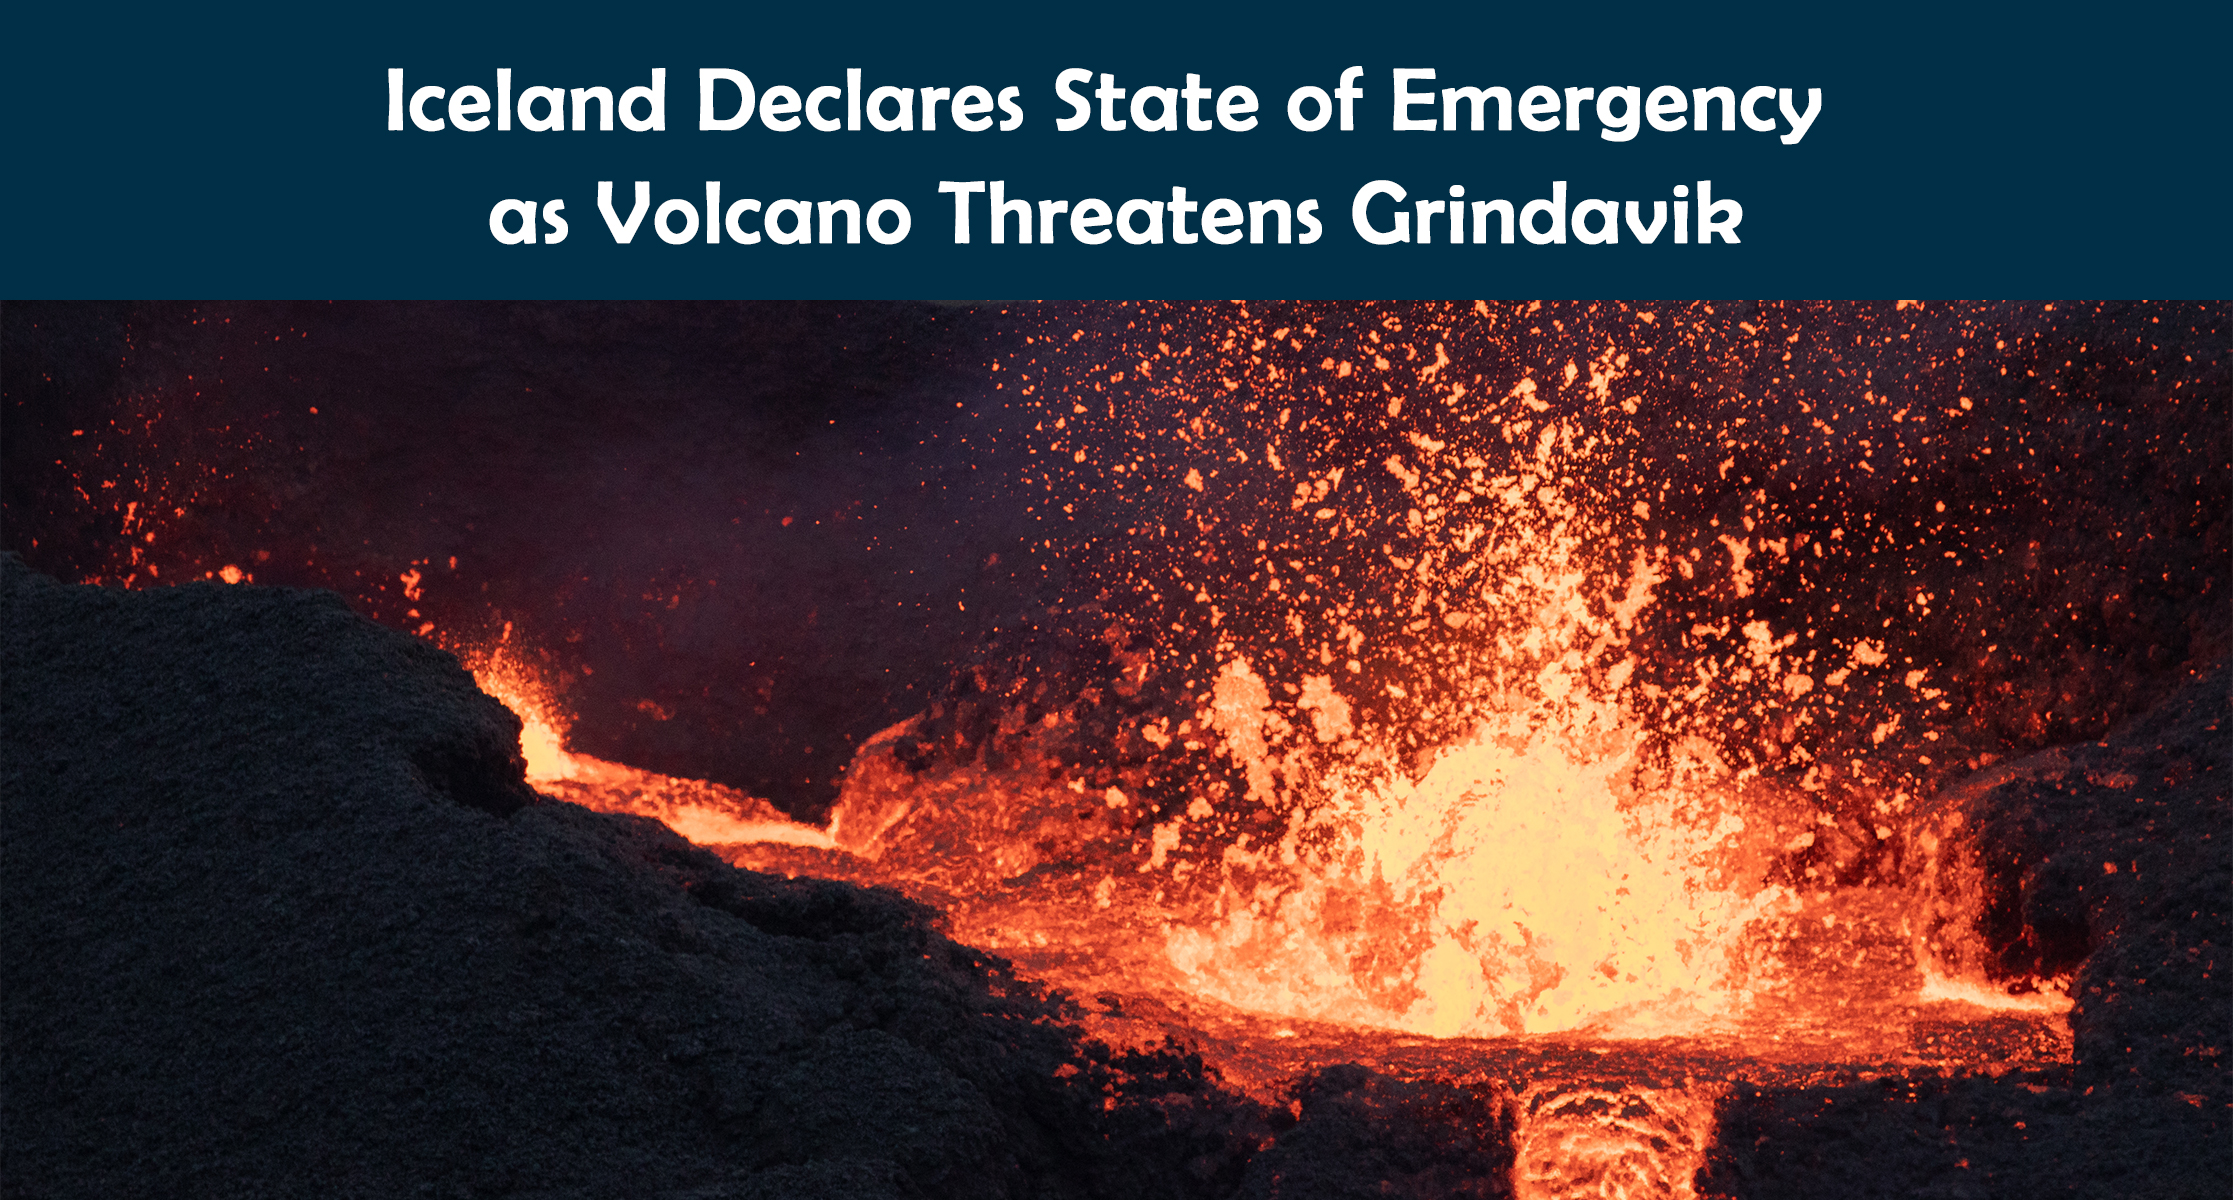 Iceland Declares State of Emergency as Volcano Threatens Grindavik